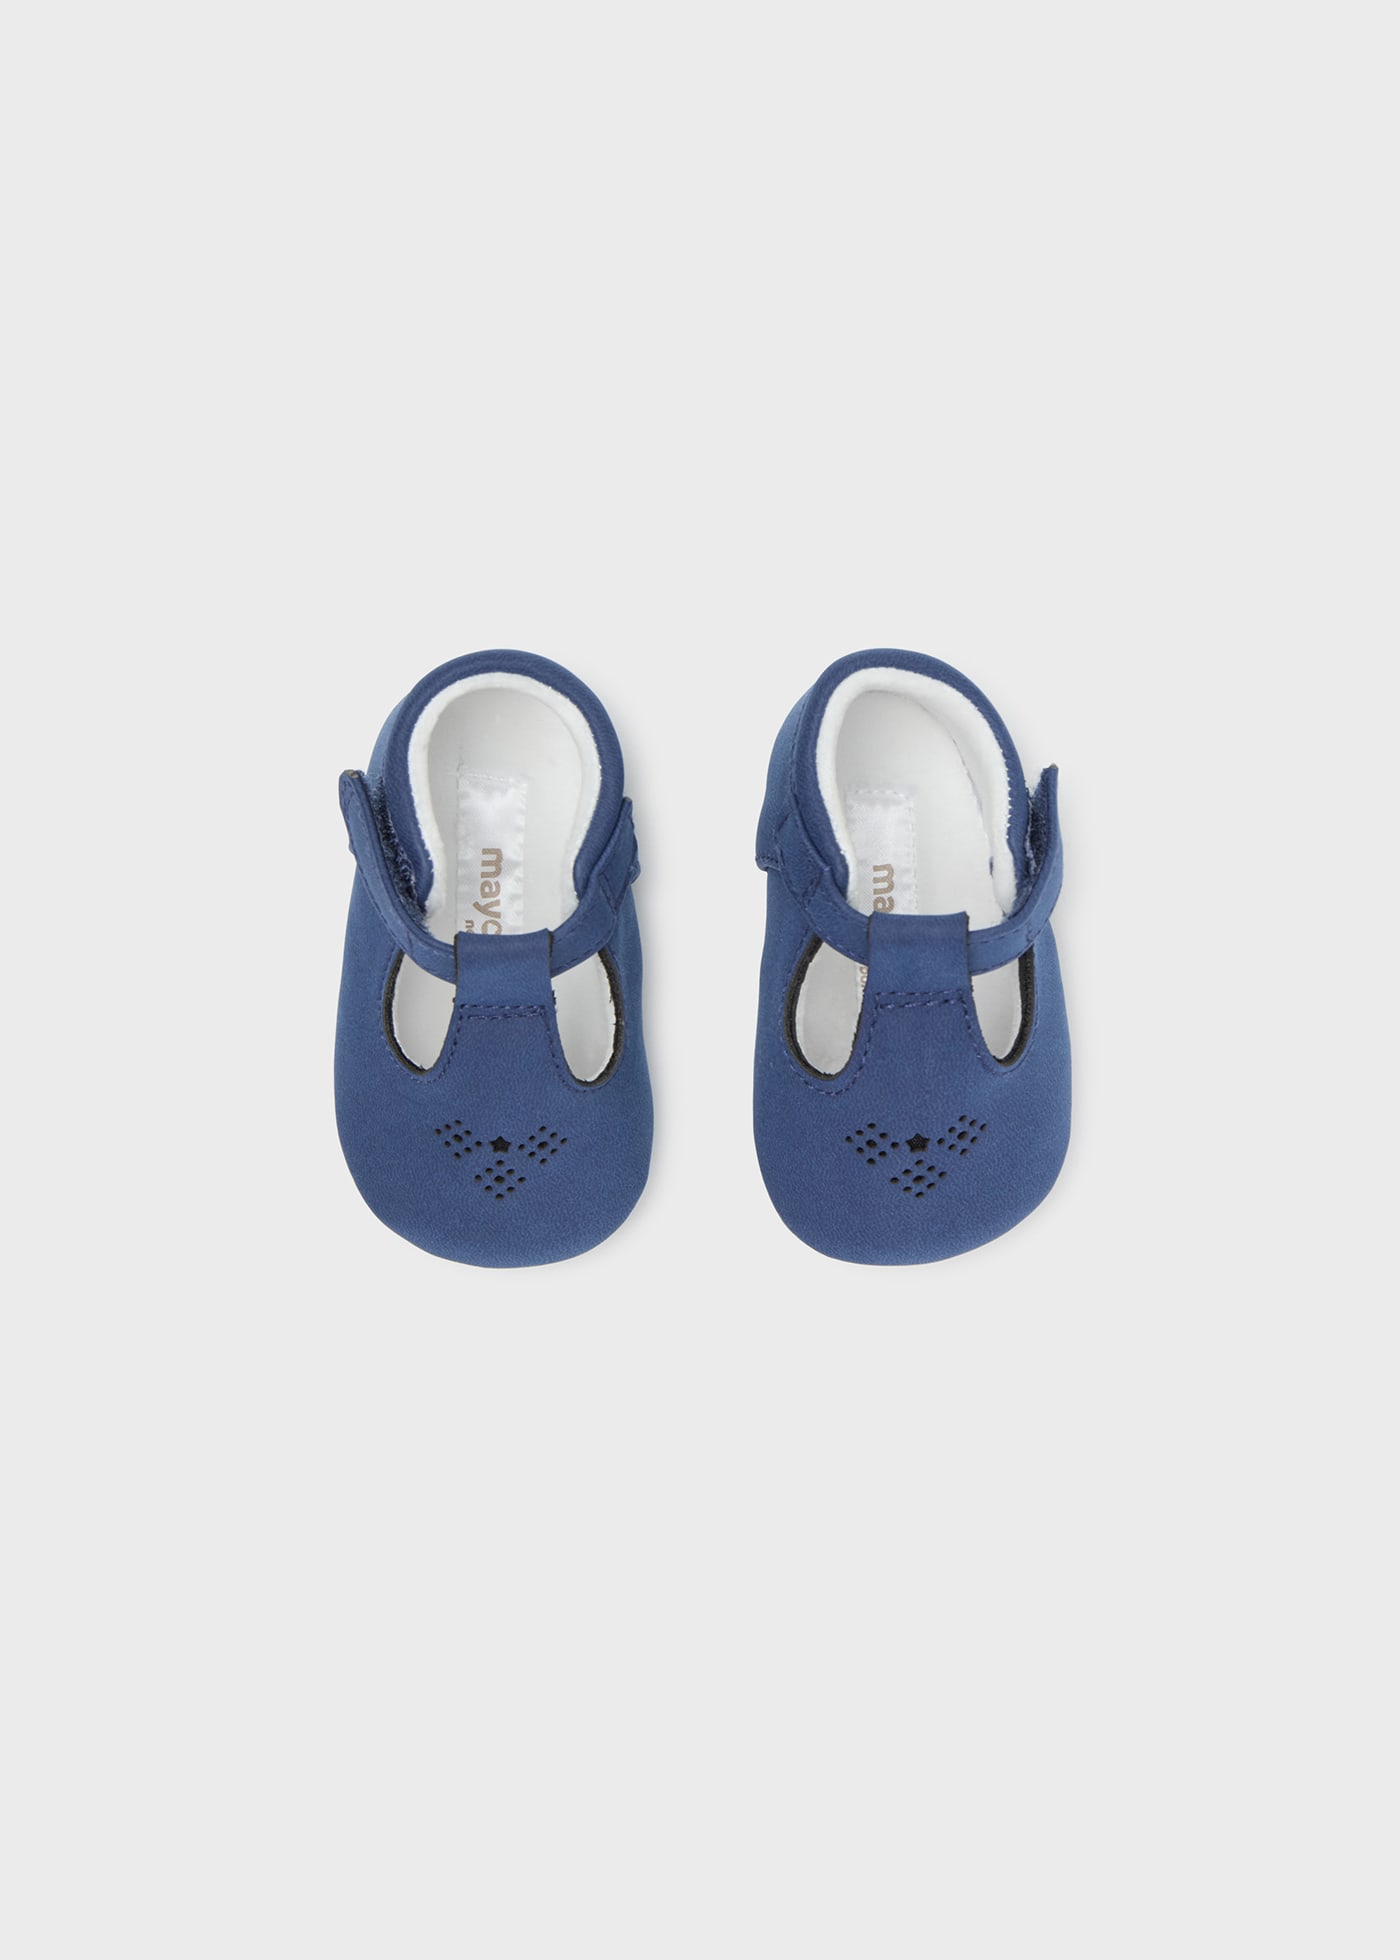 Newborn baby shoes